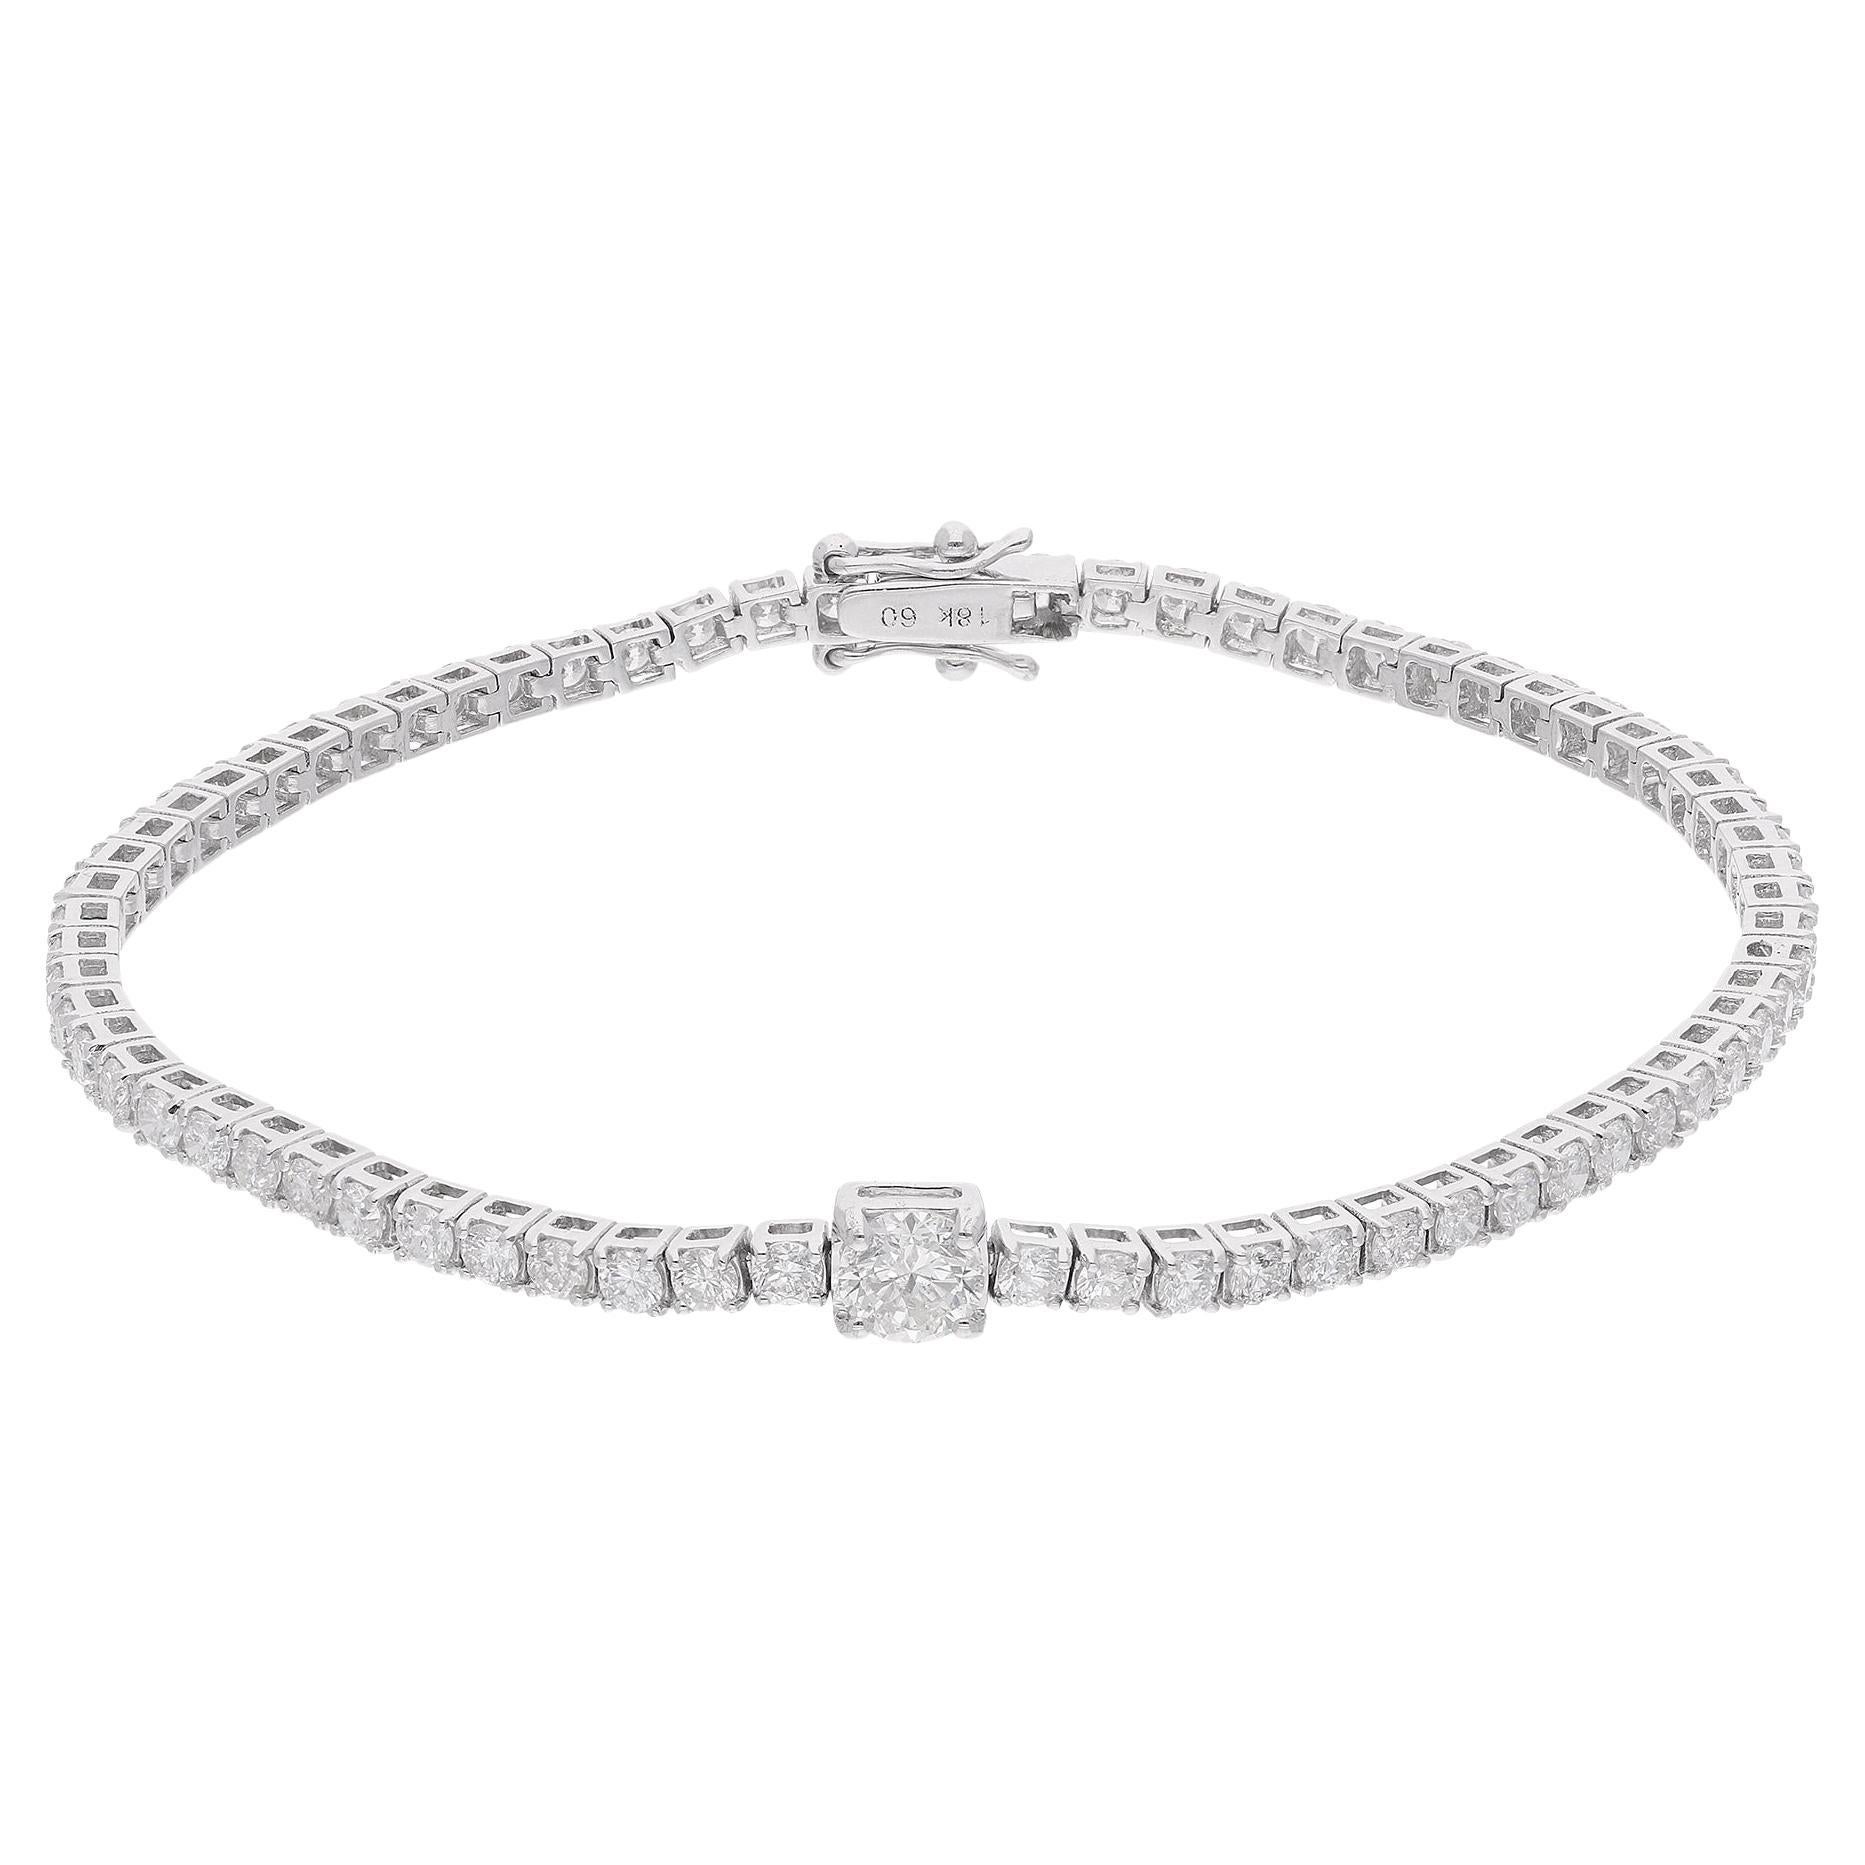 New 3.22 Carat Natural Round Diamond Tennis Bracelet 18 Karat White Gold Jewelry